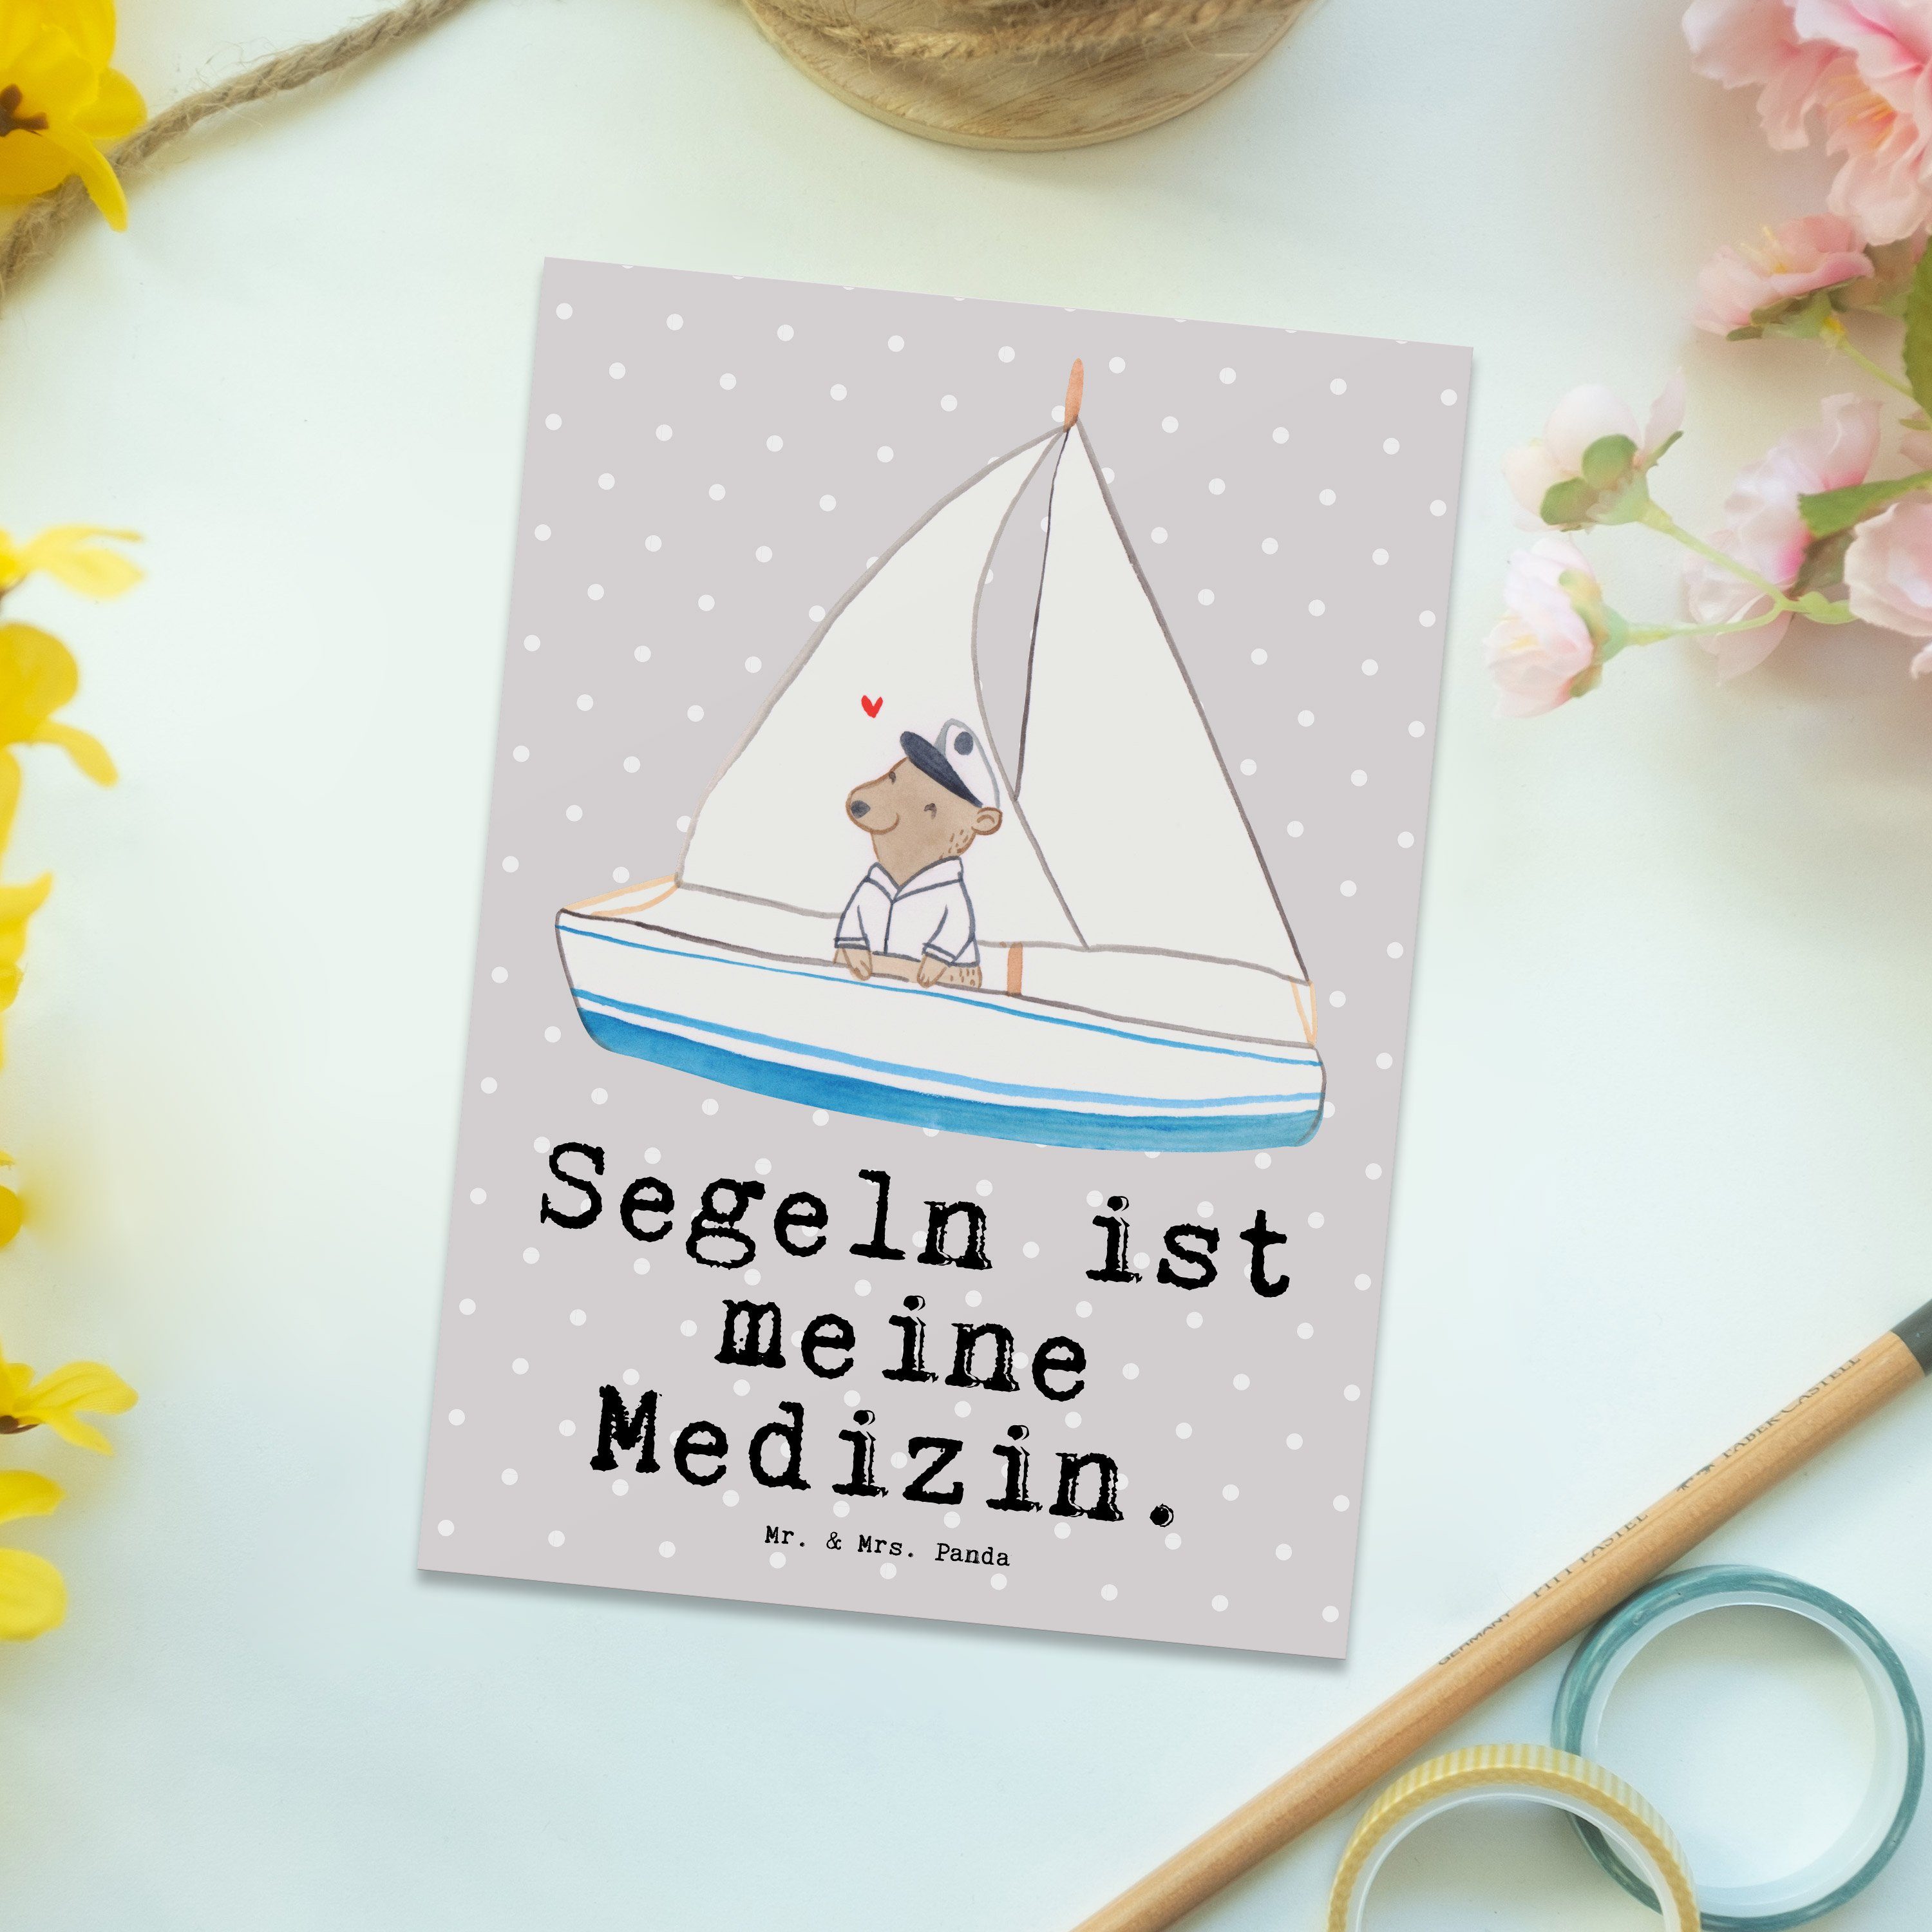 Mr. & Mrs. Panda Postkarte Bär Segeln Medizin - Grau Pastell - Geschenk, Grußkarte, Segelboot, S